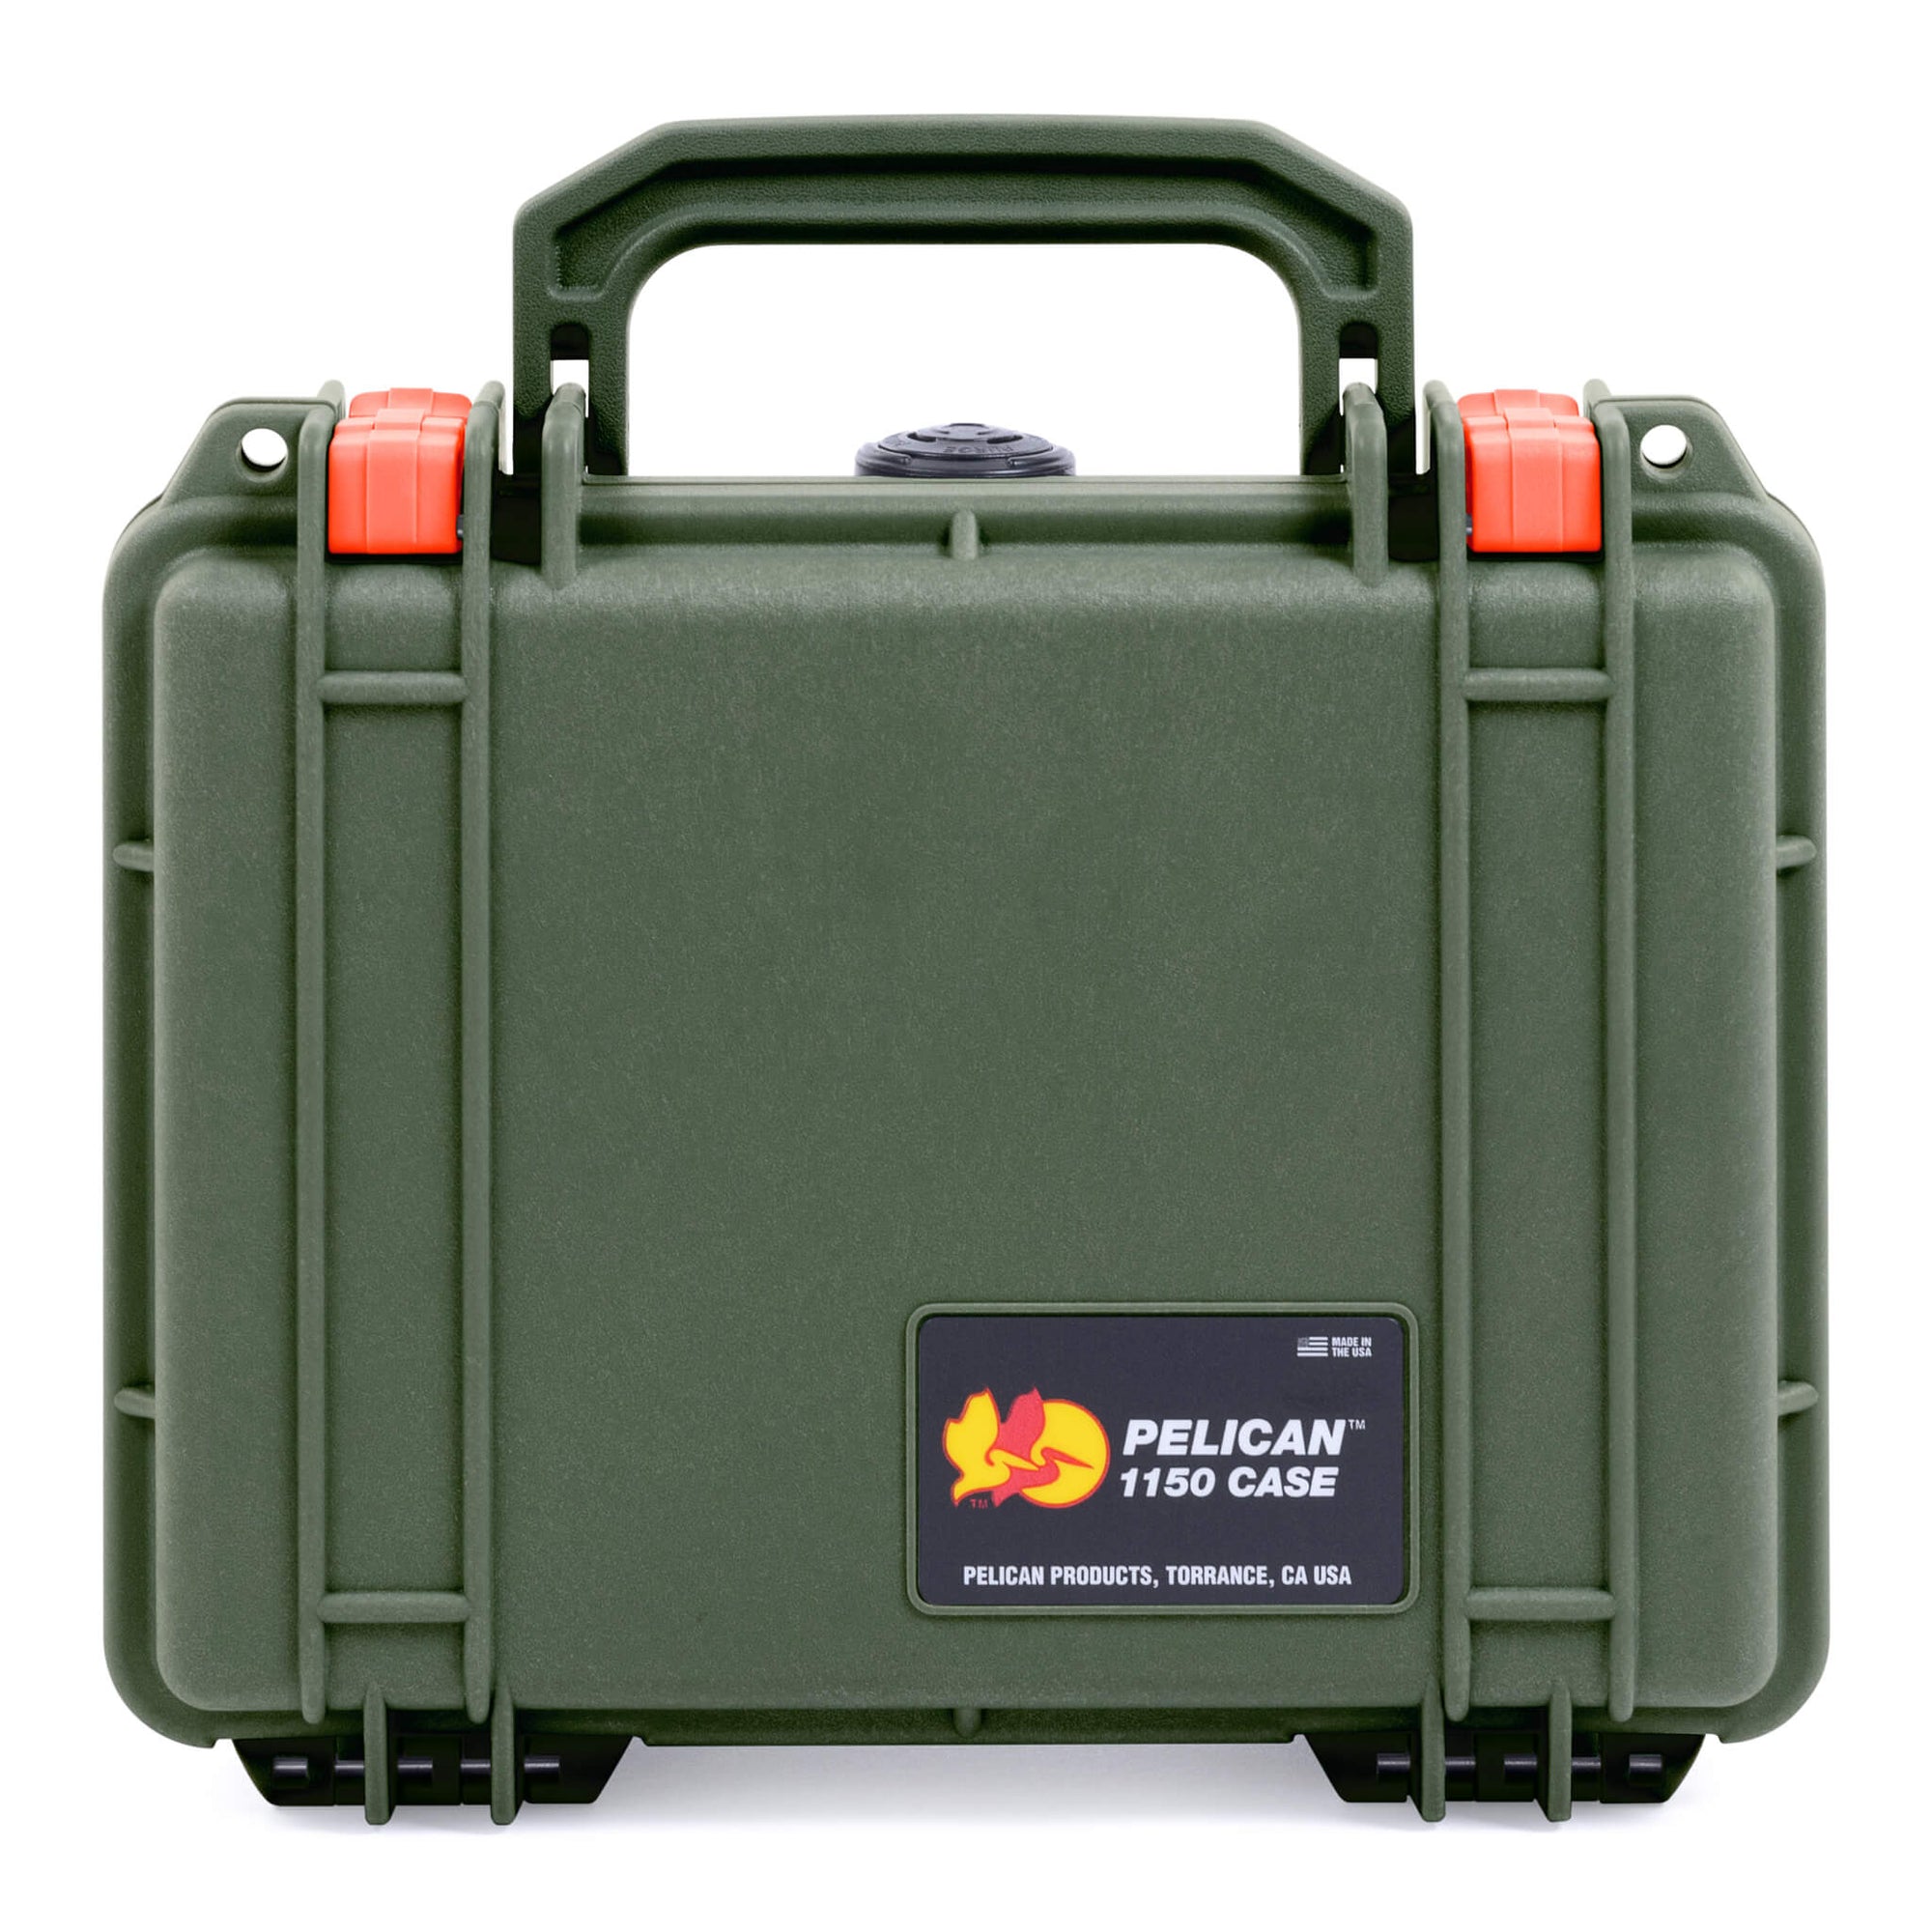 Pelican 1150 Case, OD Green with Orange Latches ColorCase 